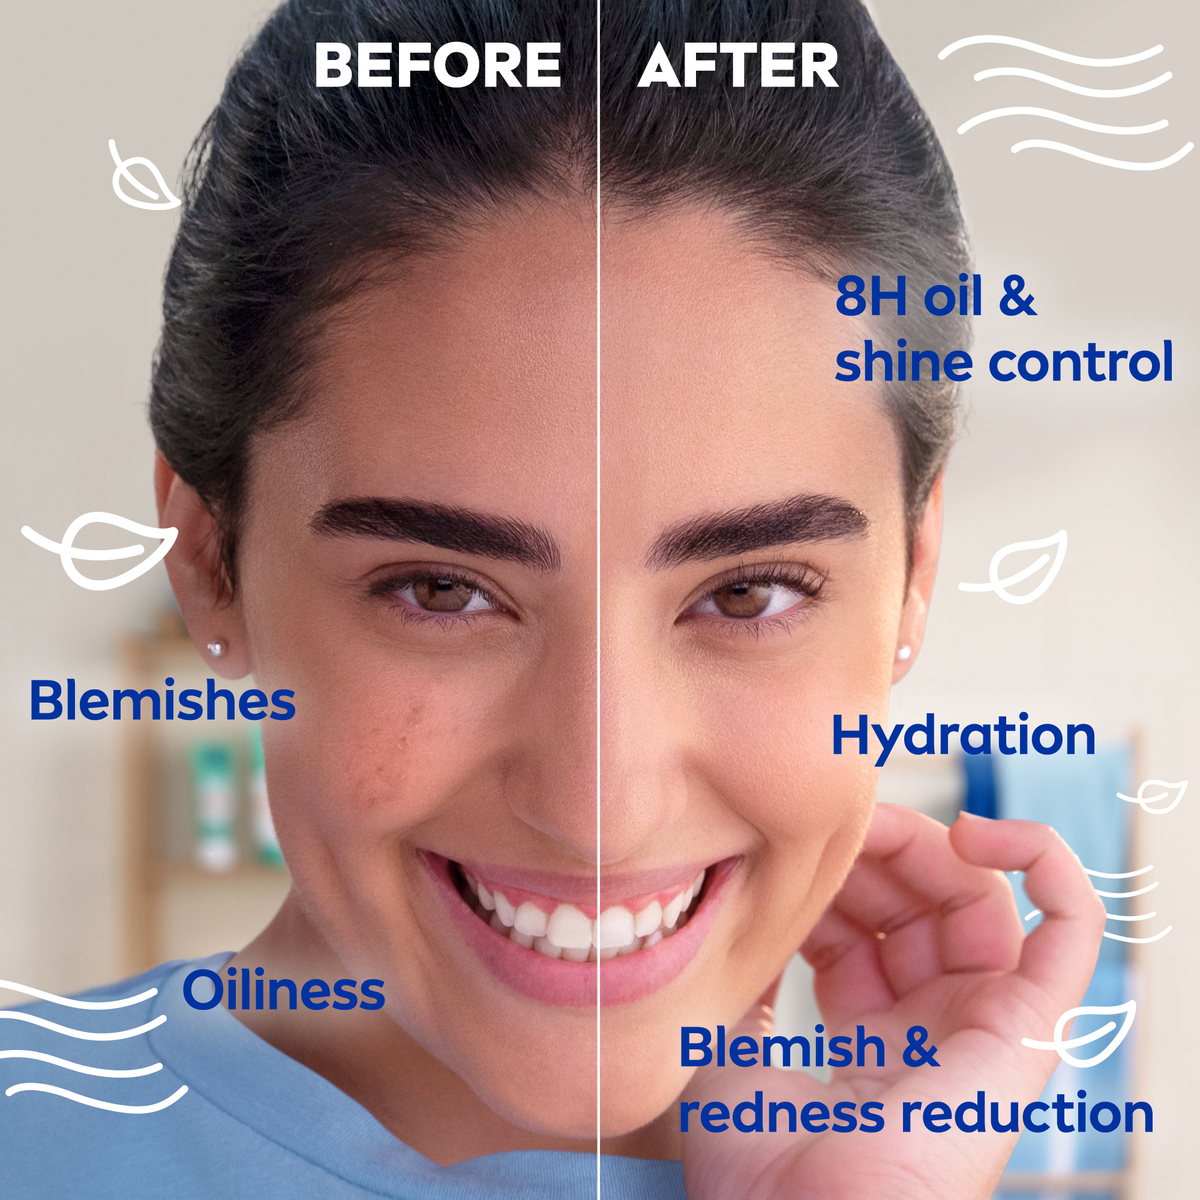 Nivea Face Wash Deep Pore Cleanser Clear Up 50 ml